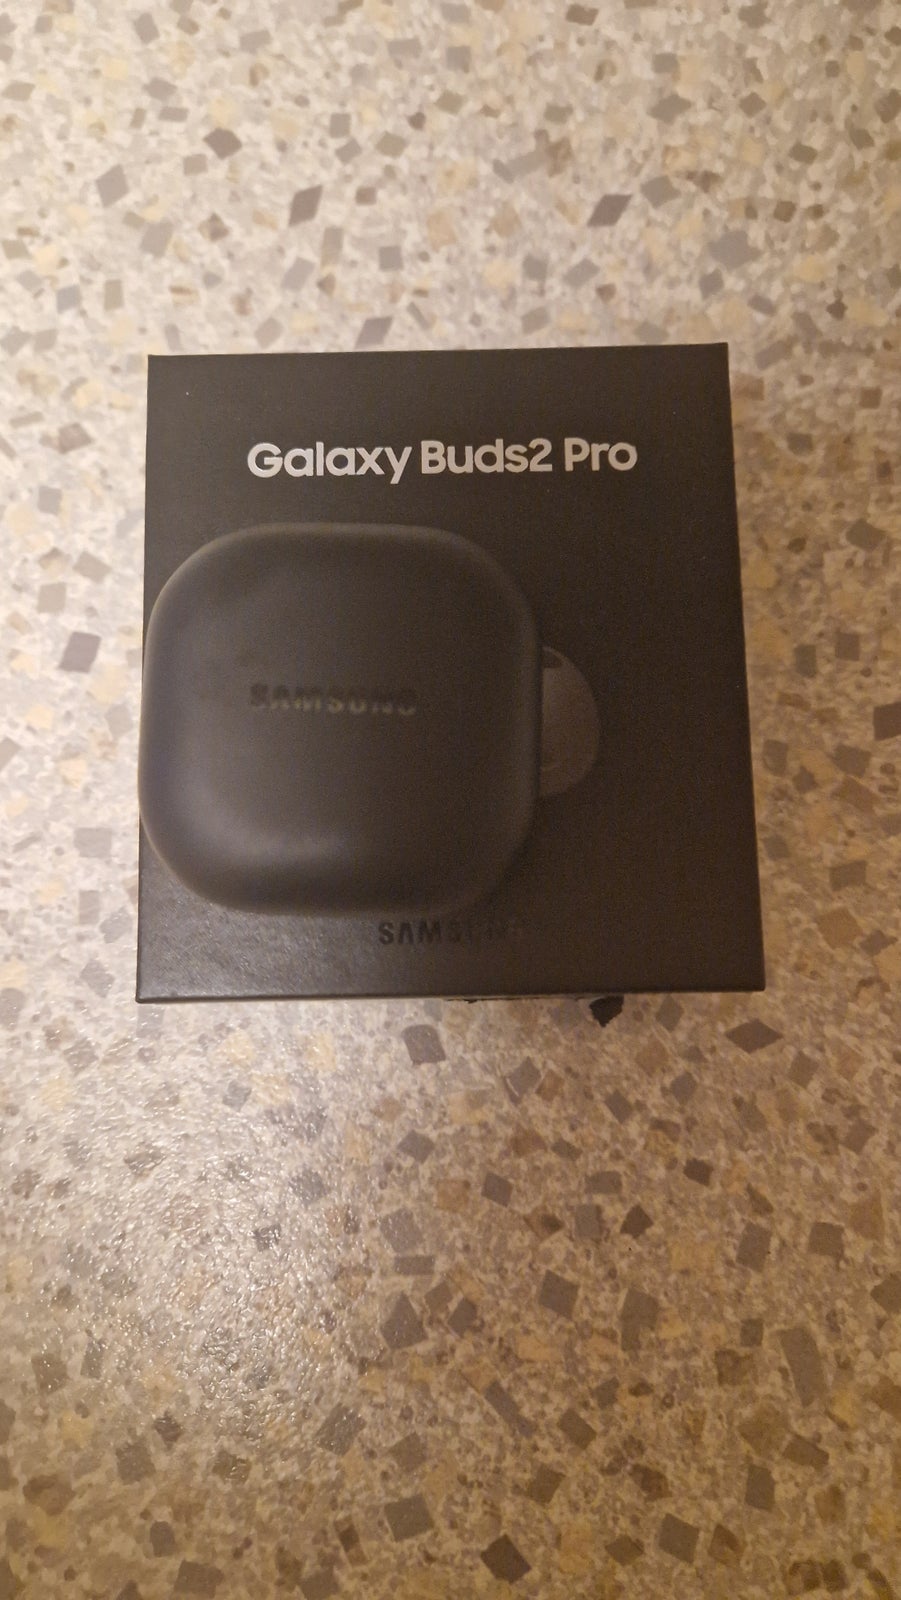 Bluetooth headset, t. Samsung, Galaxy Buds2 Pro